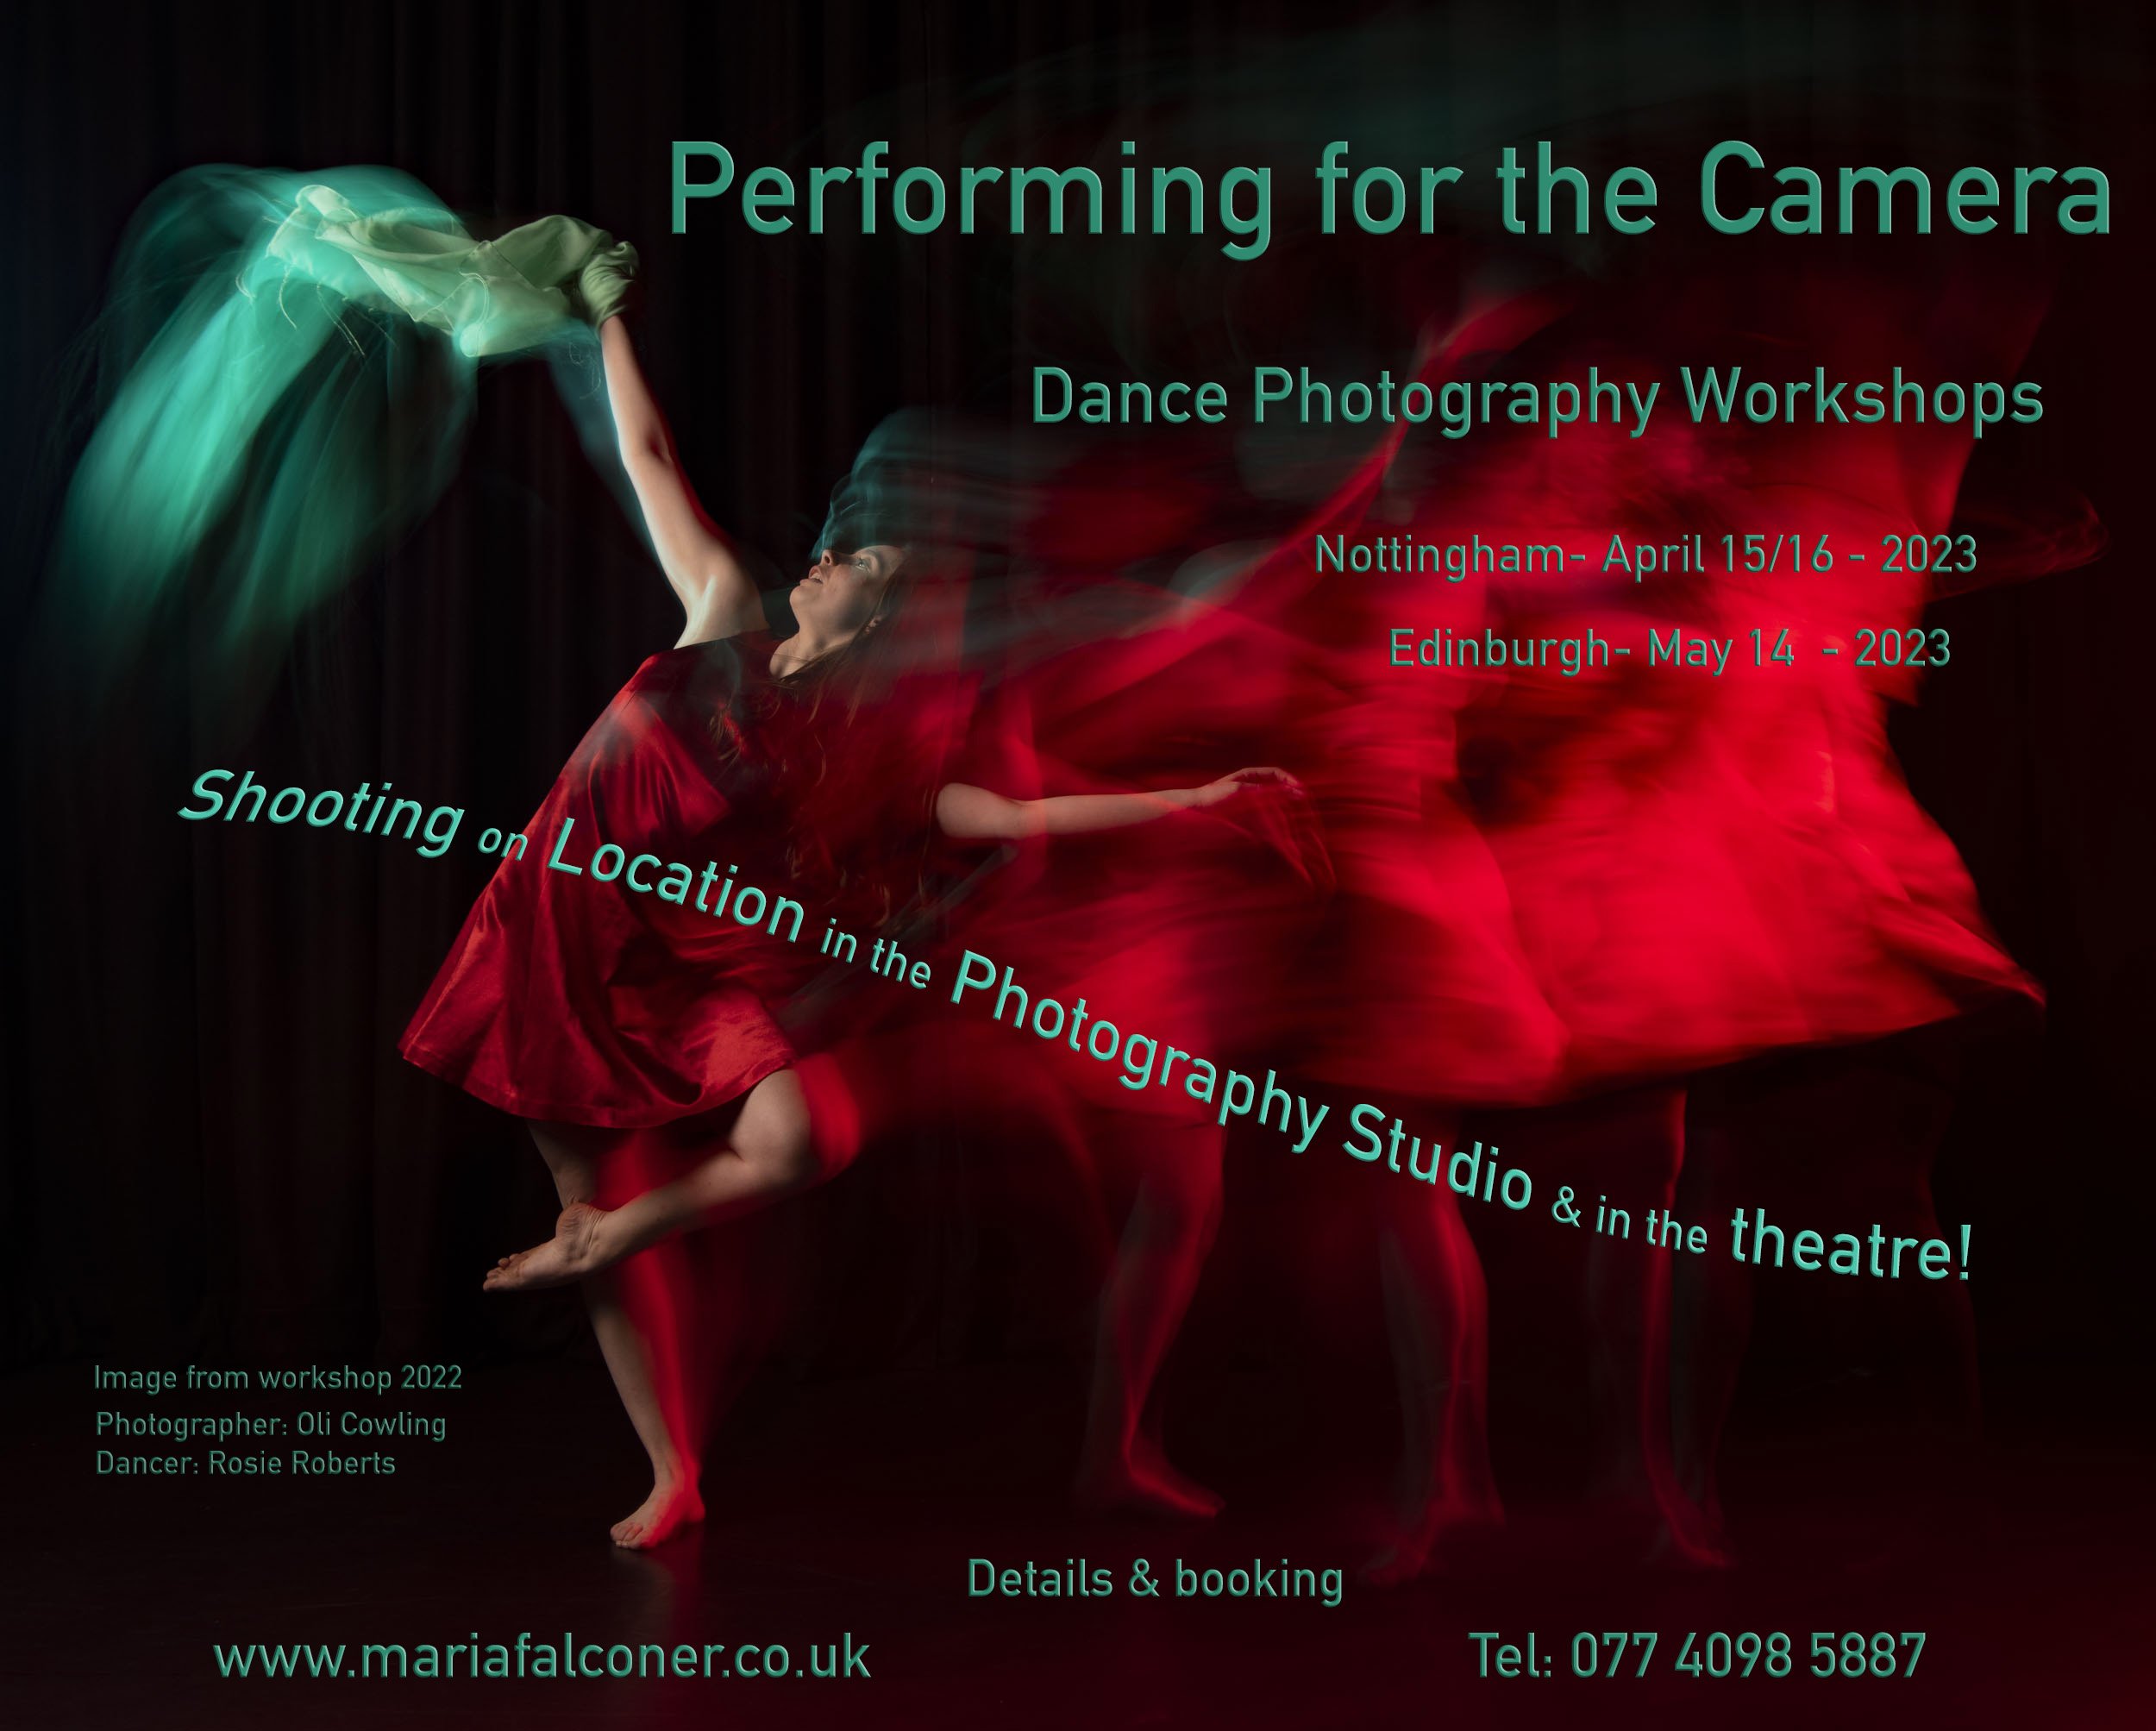  Dance Photography - 2 days - Nottingham 